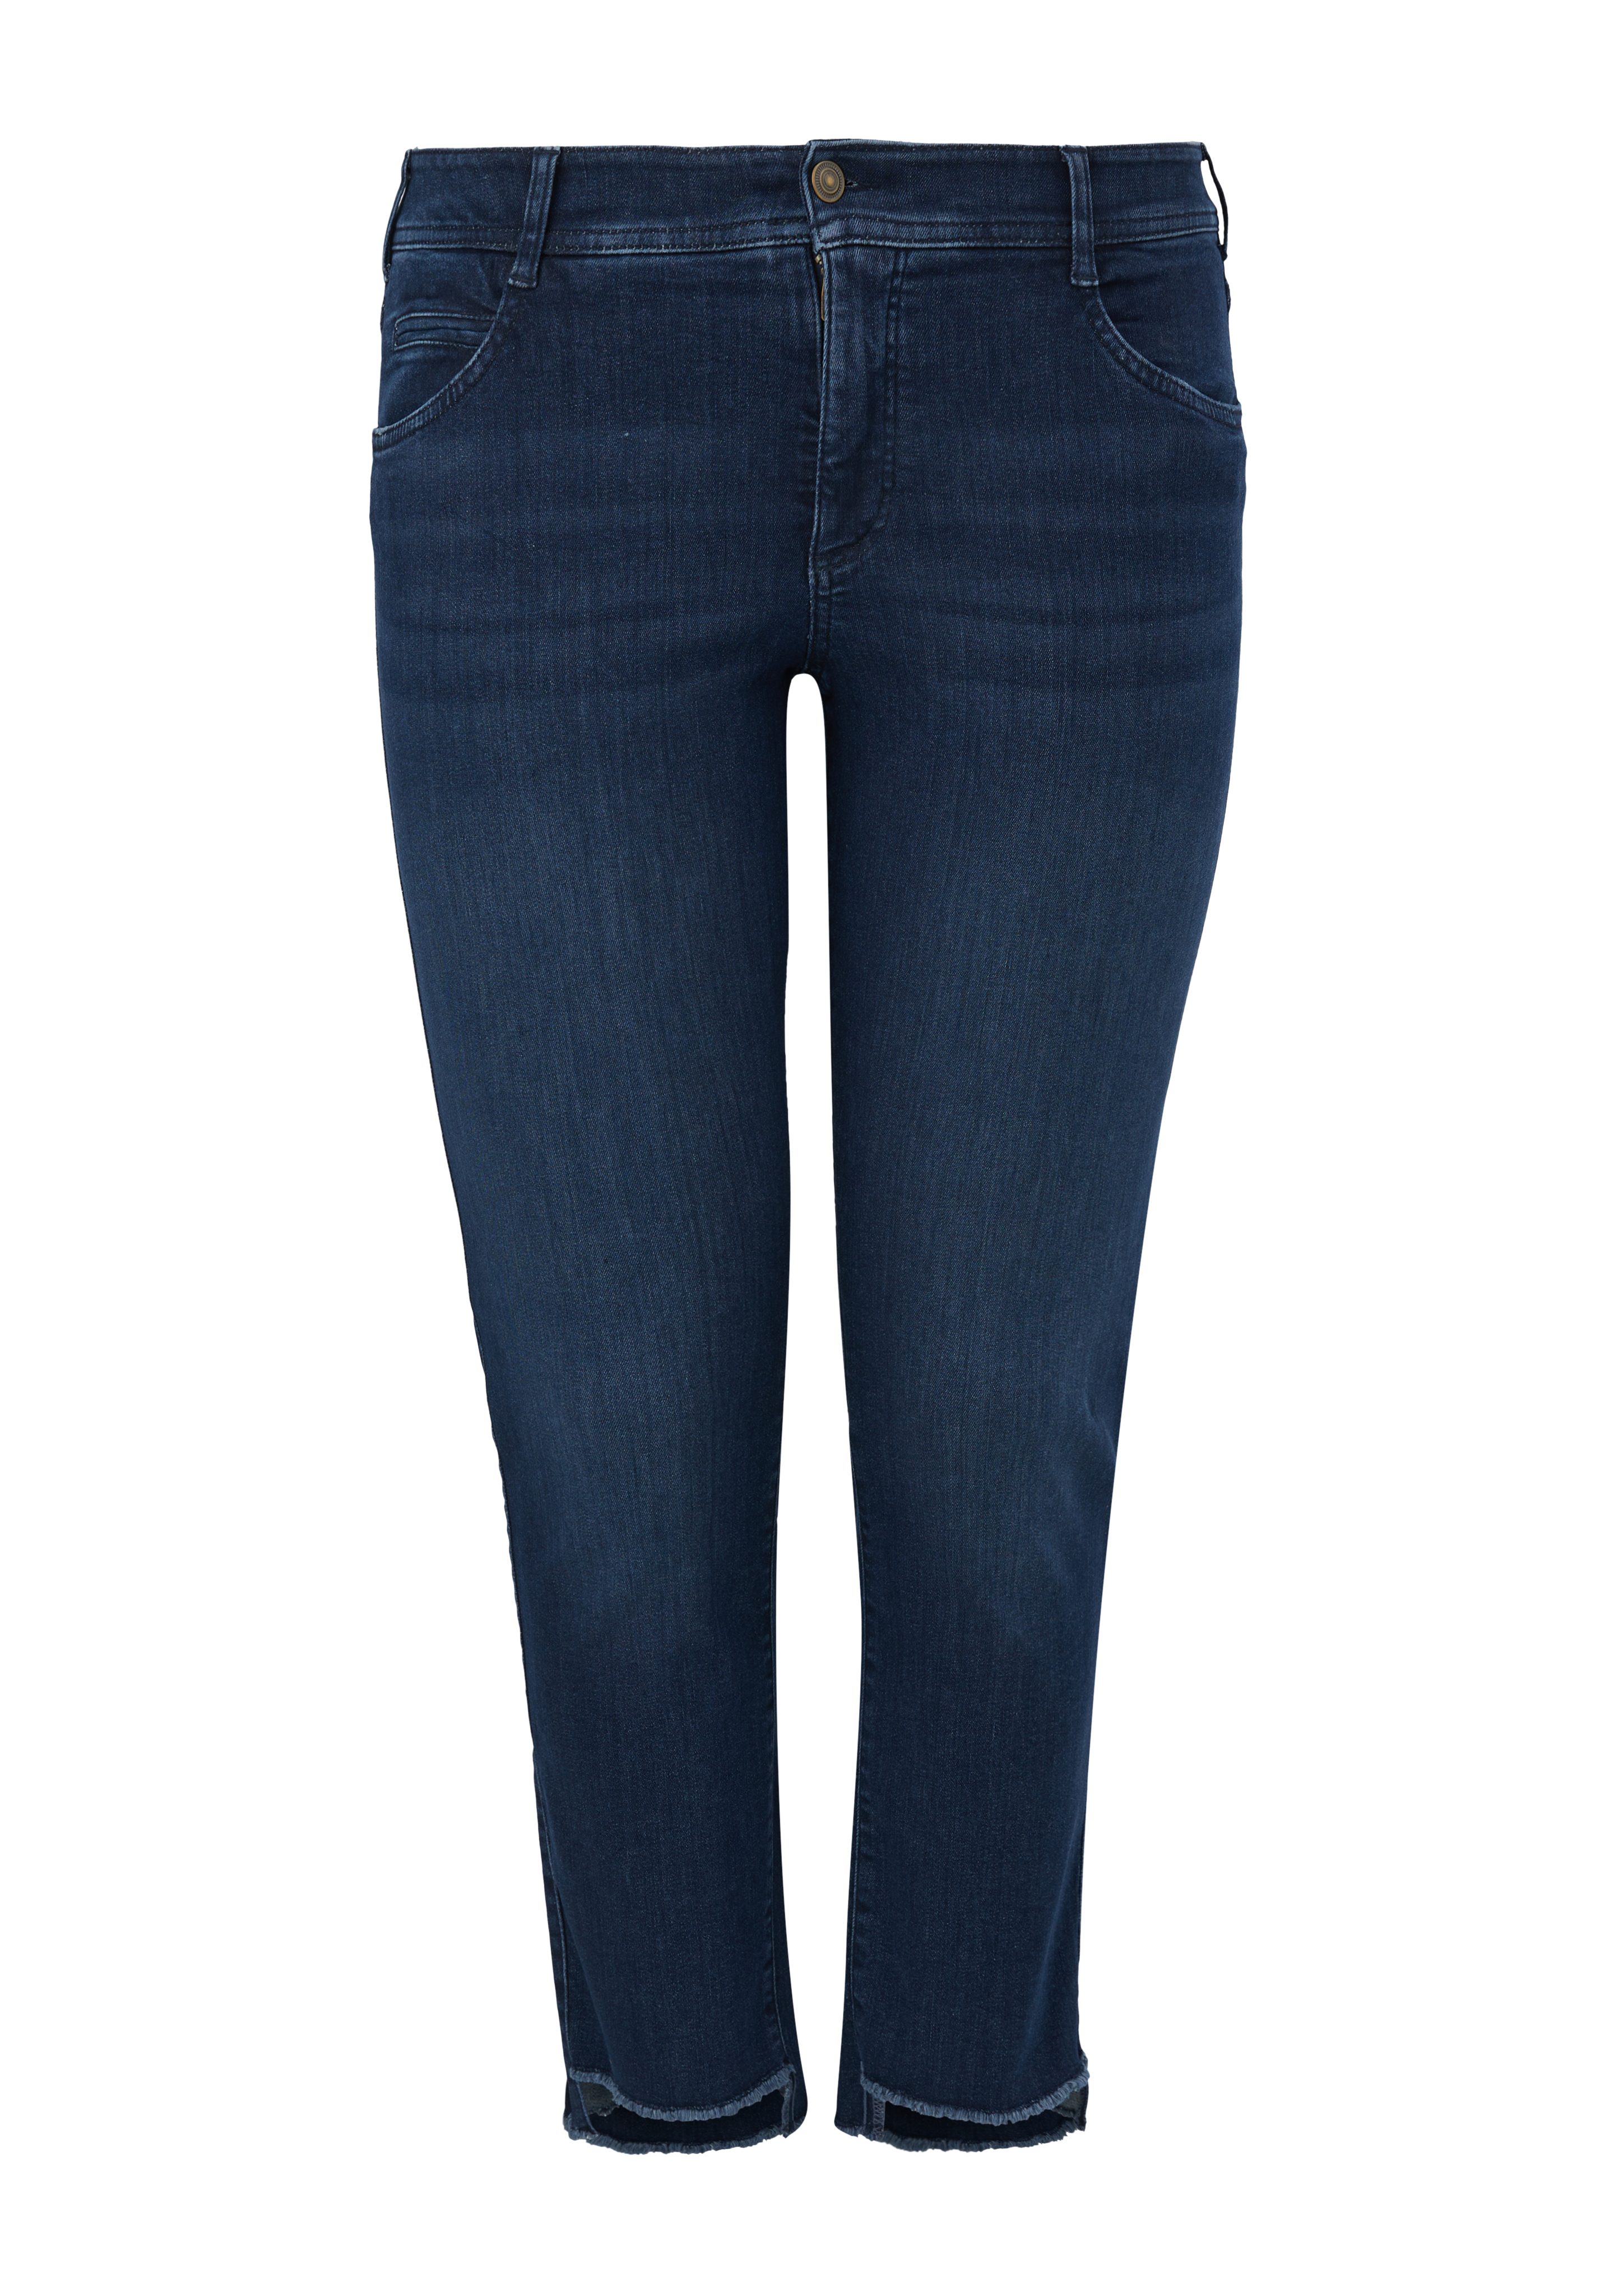 TRIANGLE Stoffhose / Slim tiefblau Slim / Fit / Leg Fransen Jeans Stickerei, Rise Mid Waschung